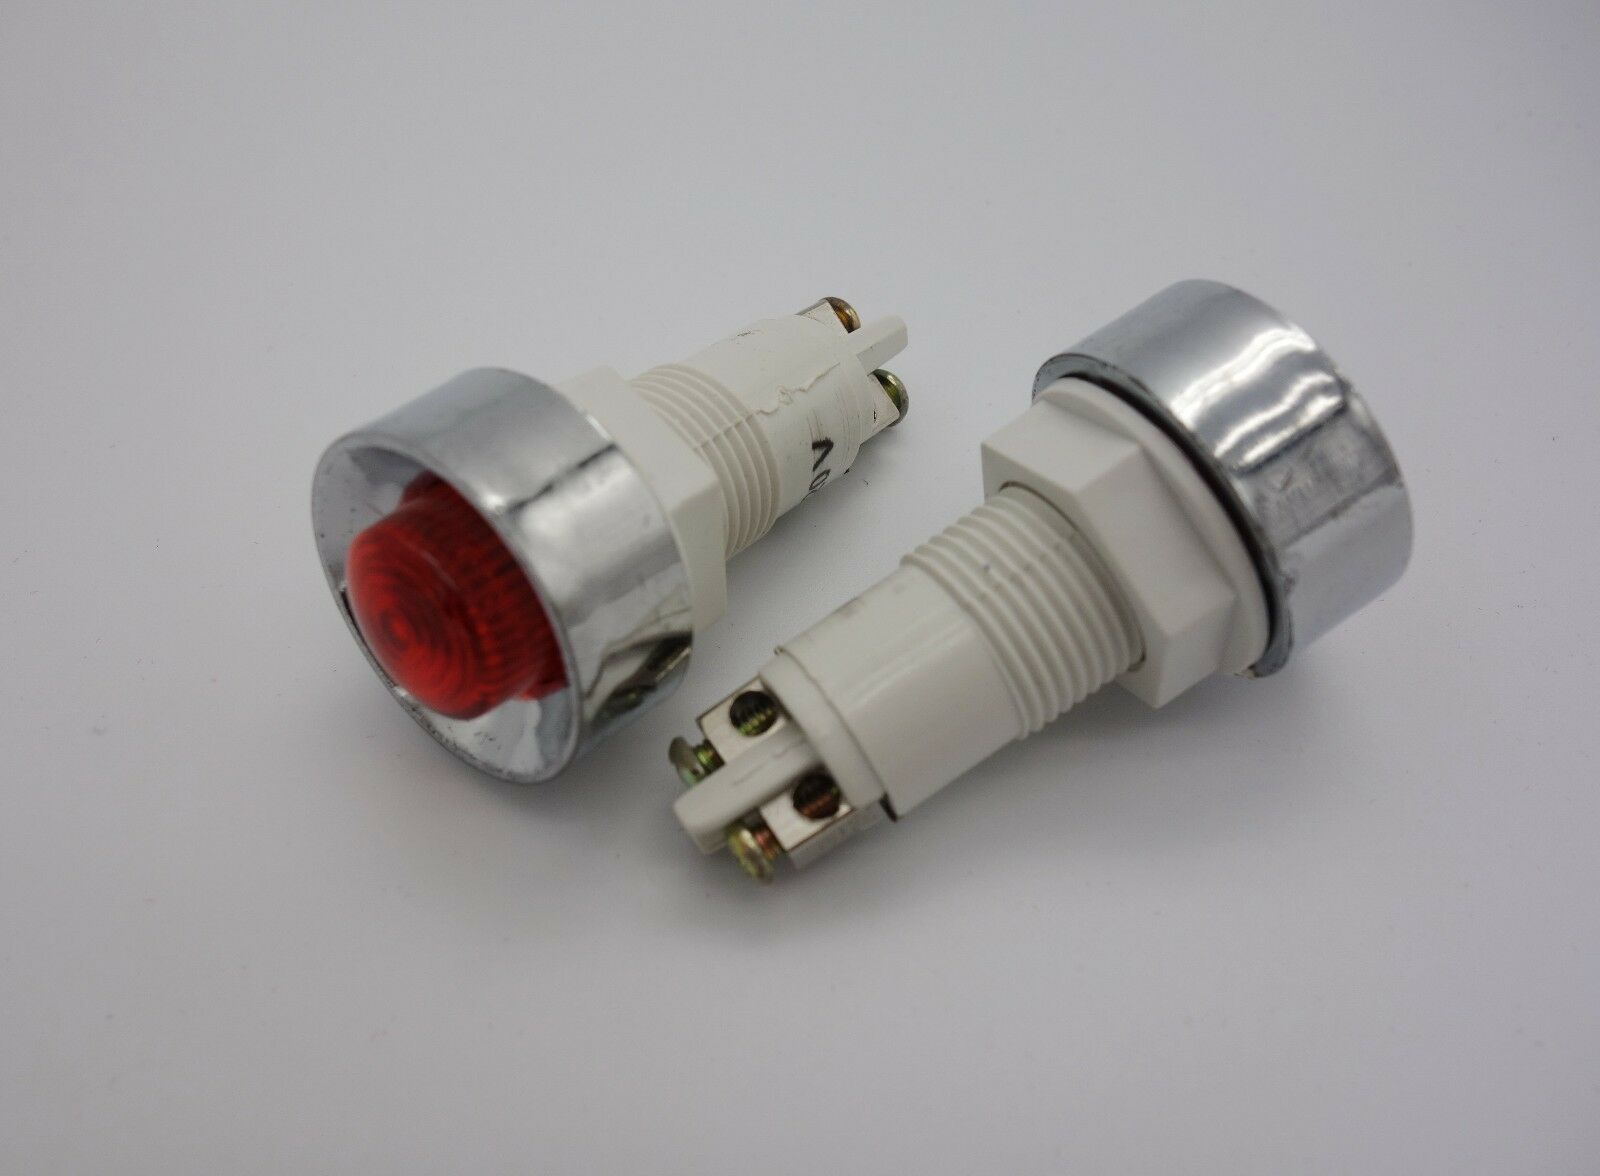 5 Pcs Cutout 13.5mm 220 AC RED incandescent Pilot Lights Screw terminal